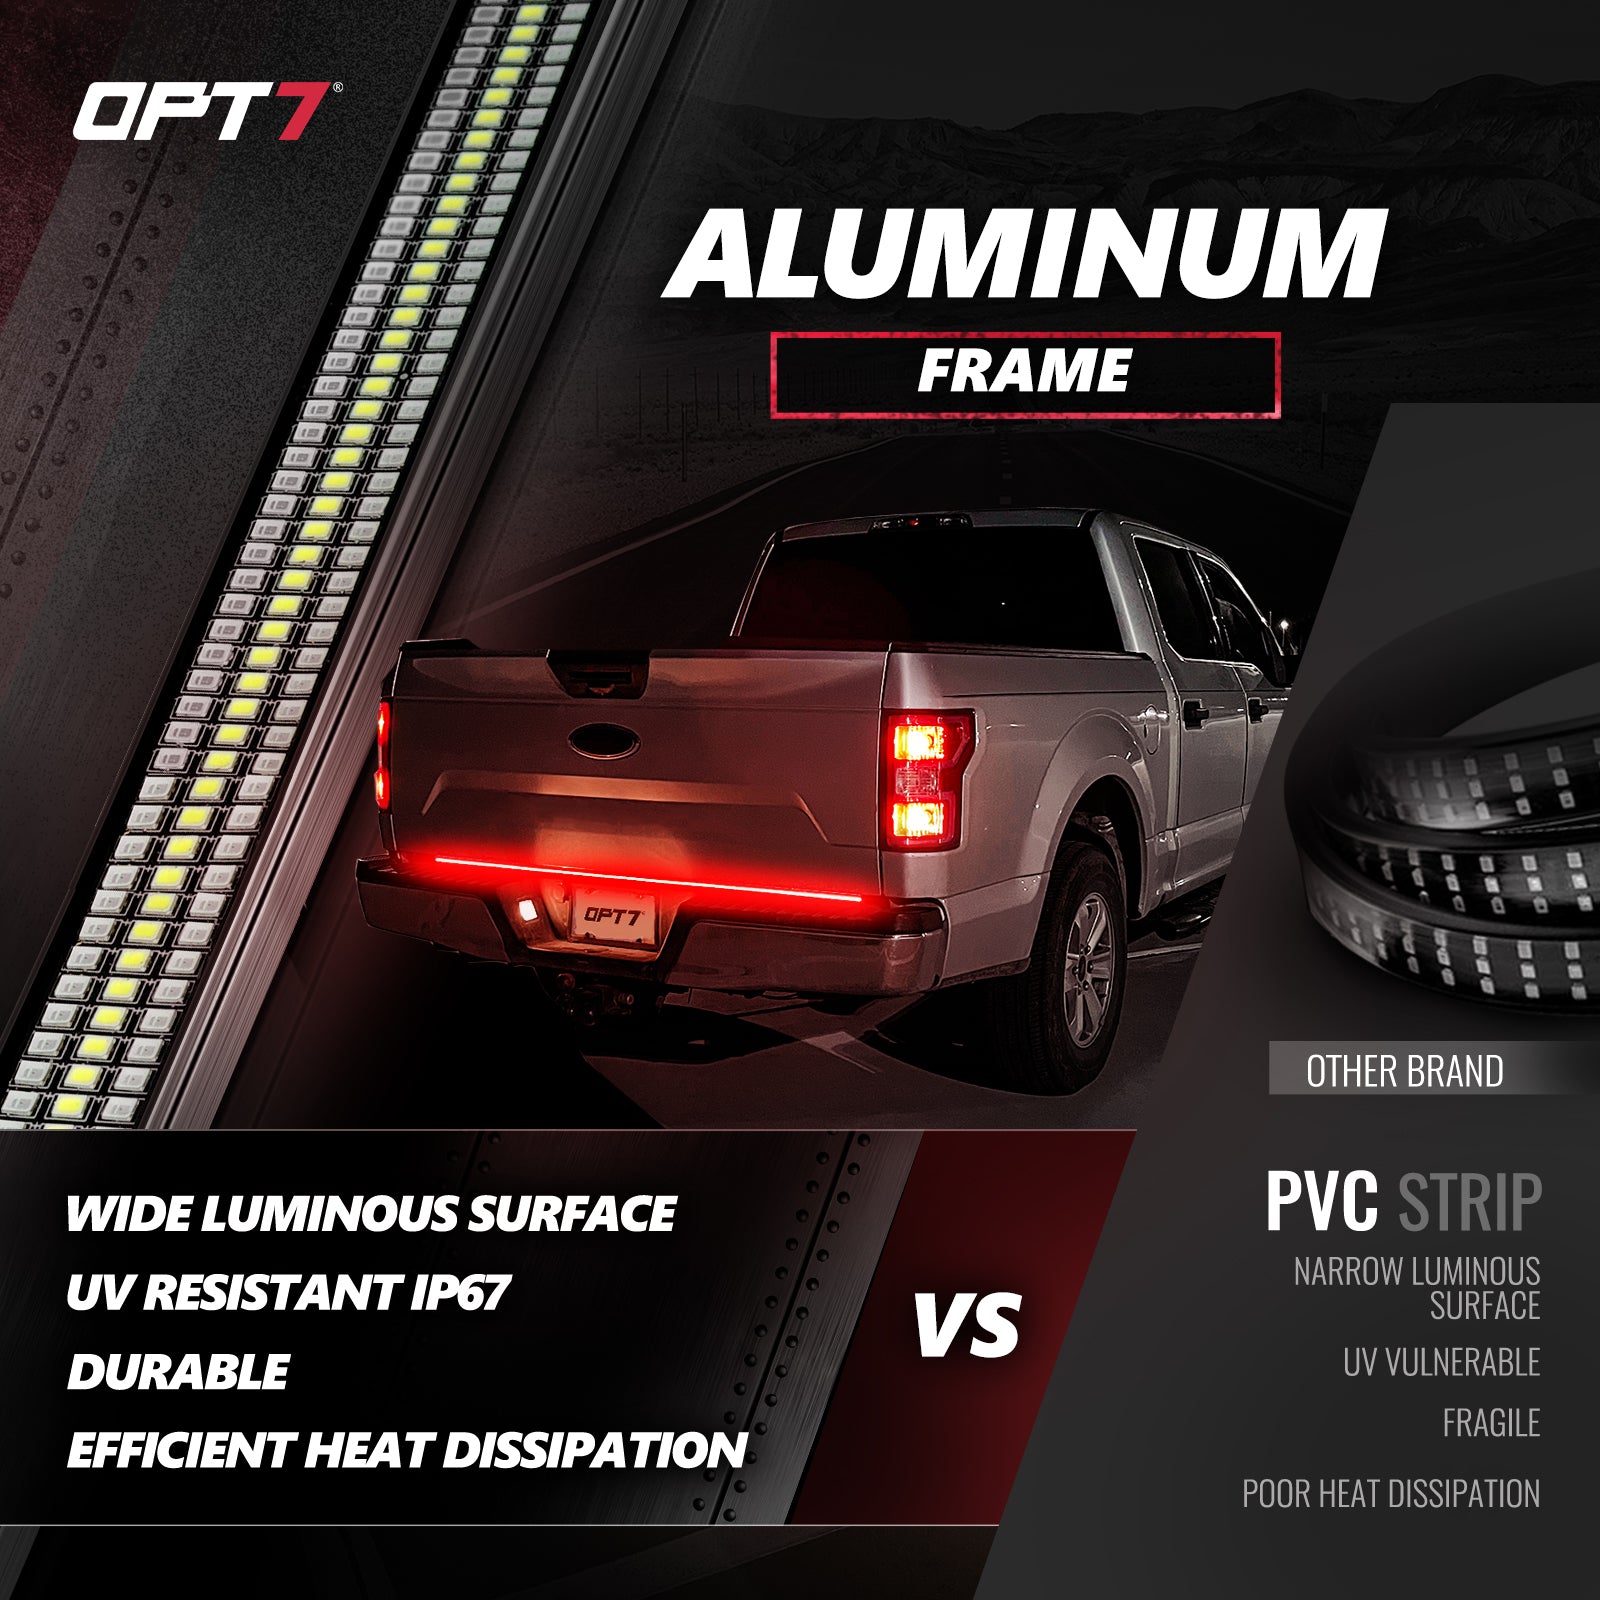 OPT7 60 Redline Parlux Standard LED Tailgate Light Bar w/Red Turn Signal,  IP67 Weatherproof Rigid Aluminum Frame Light Strip for Trucks - No-Drill